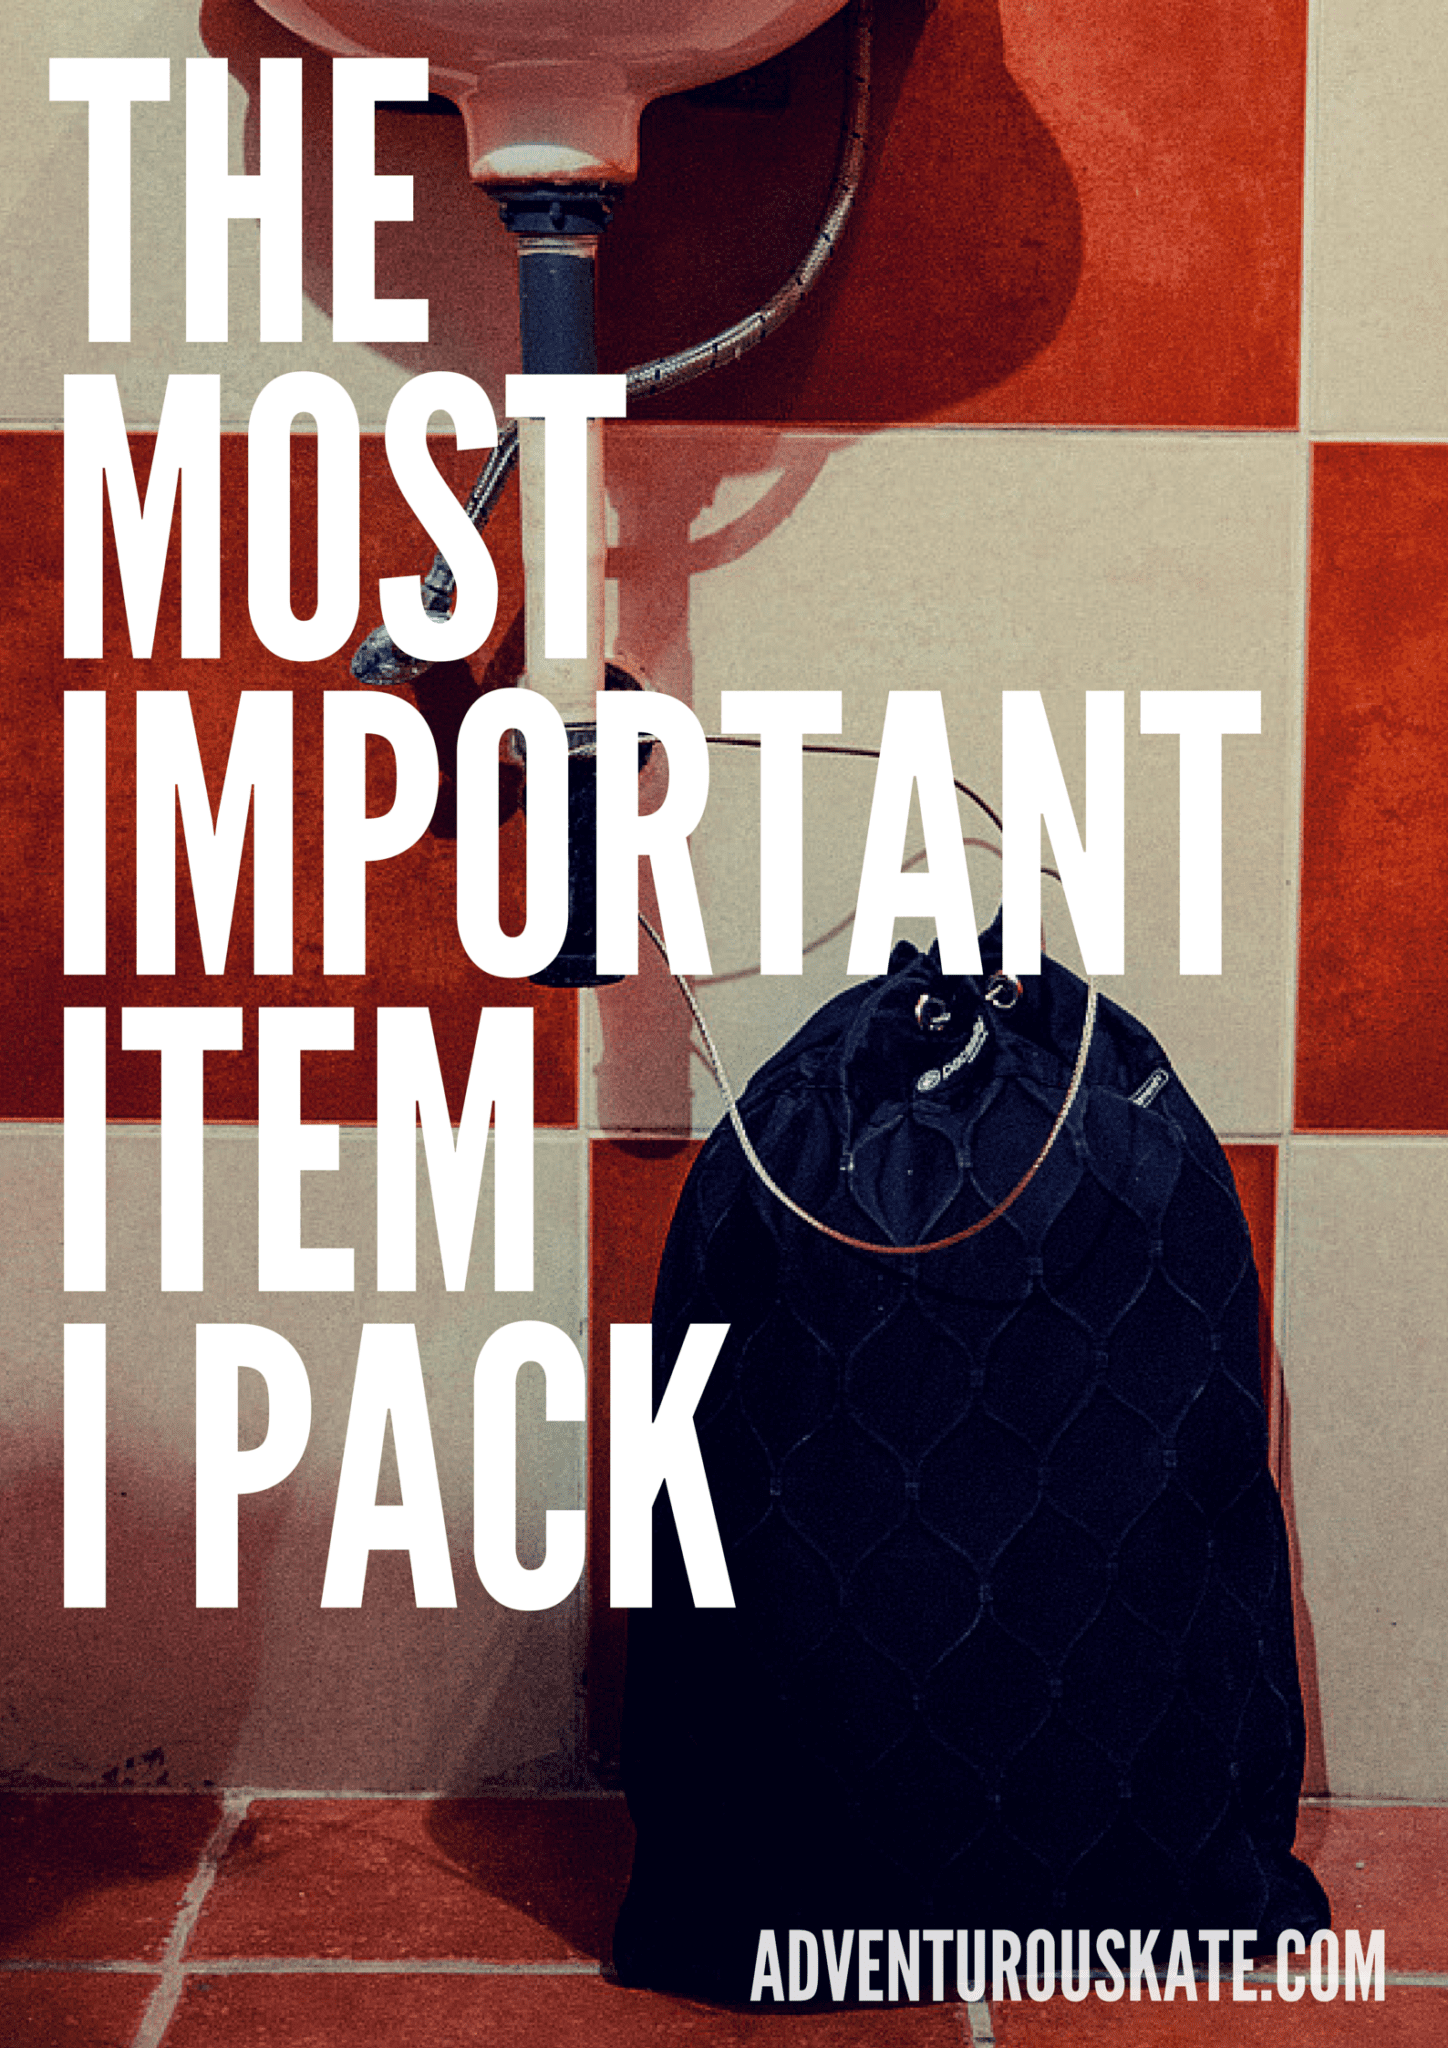 https://www.adventurouskate.com/wp-content/uploads/2015/02/The-Most-ImportantItem-I-Pack.png